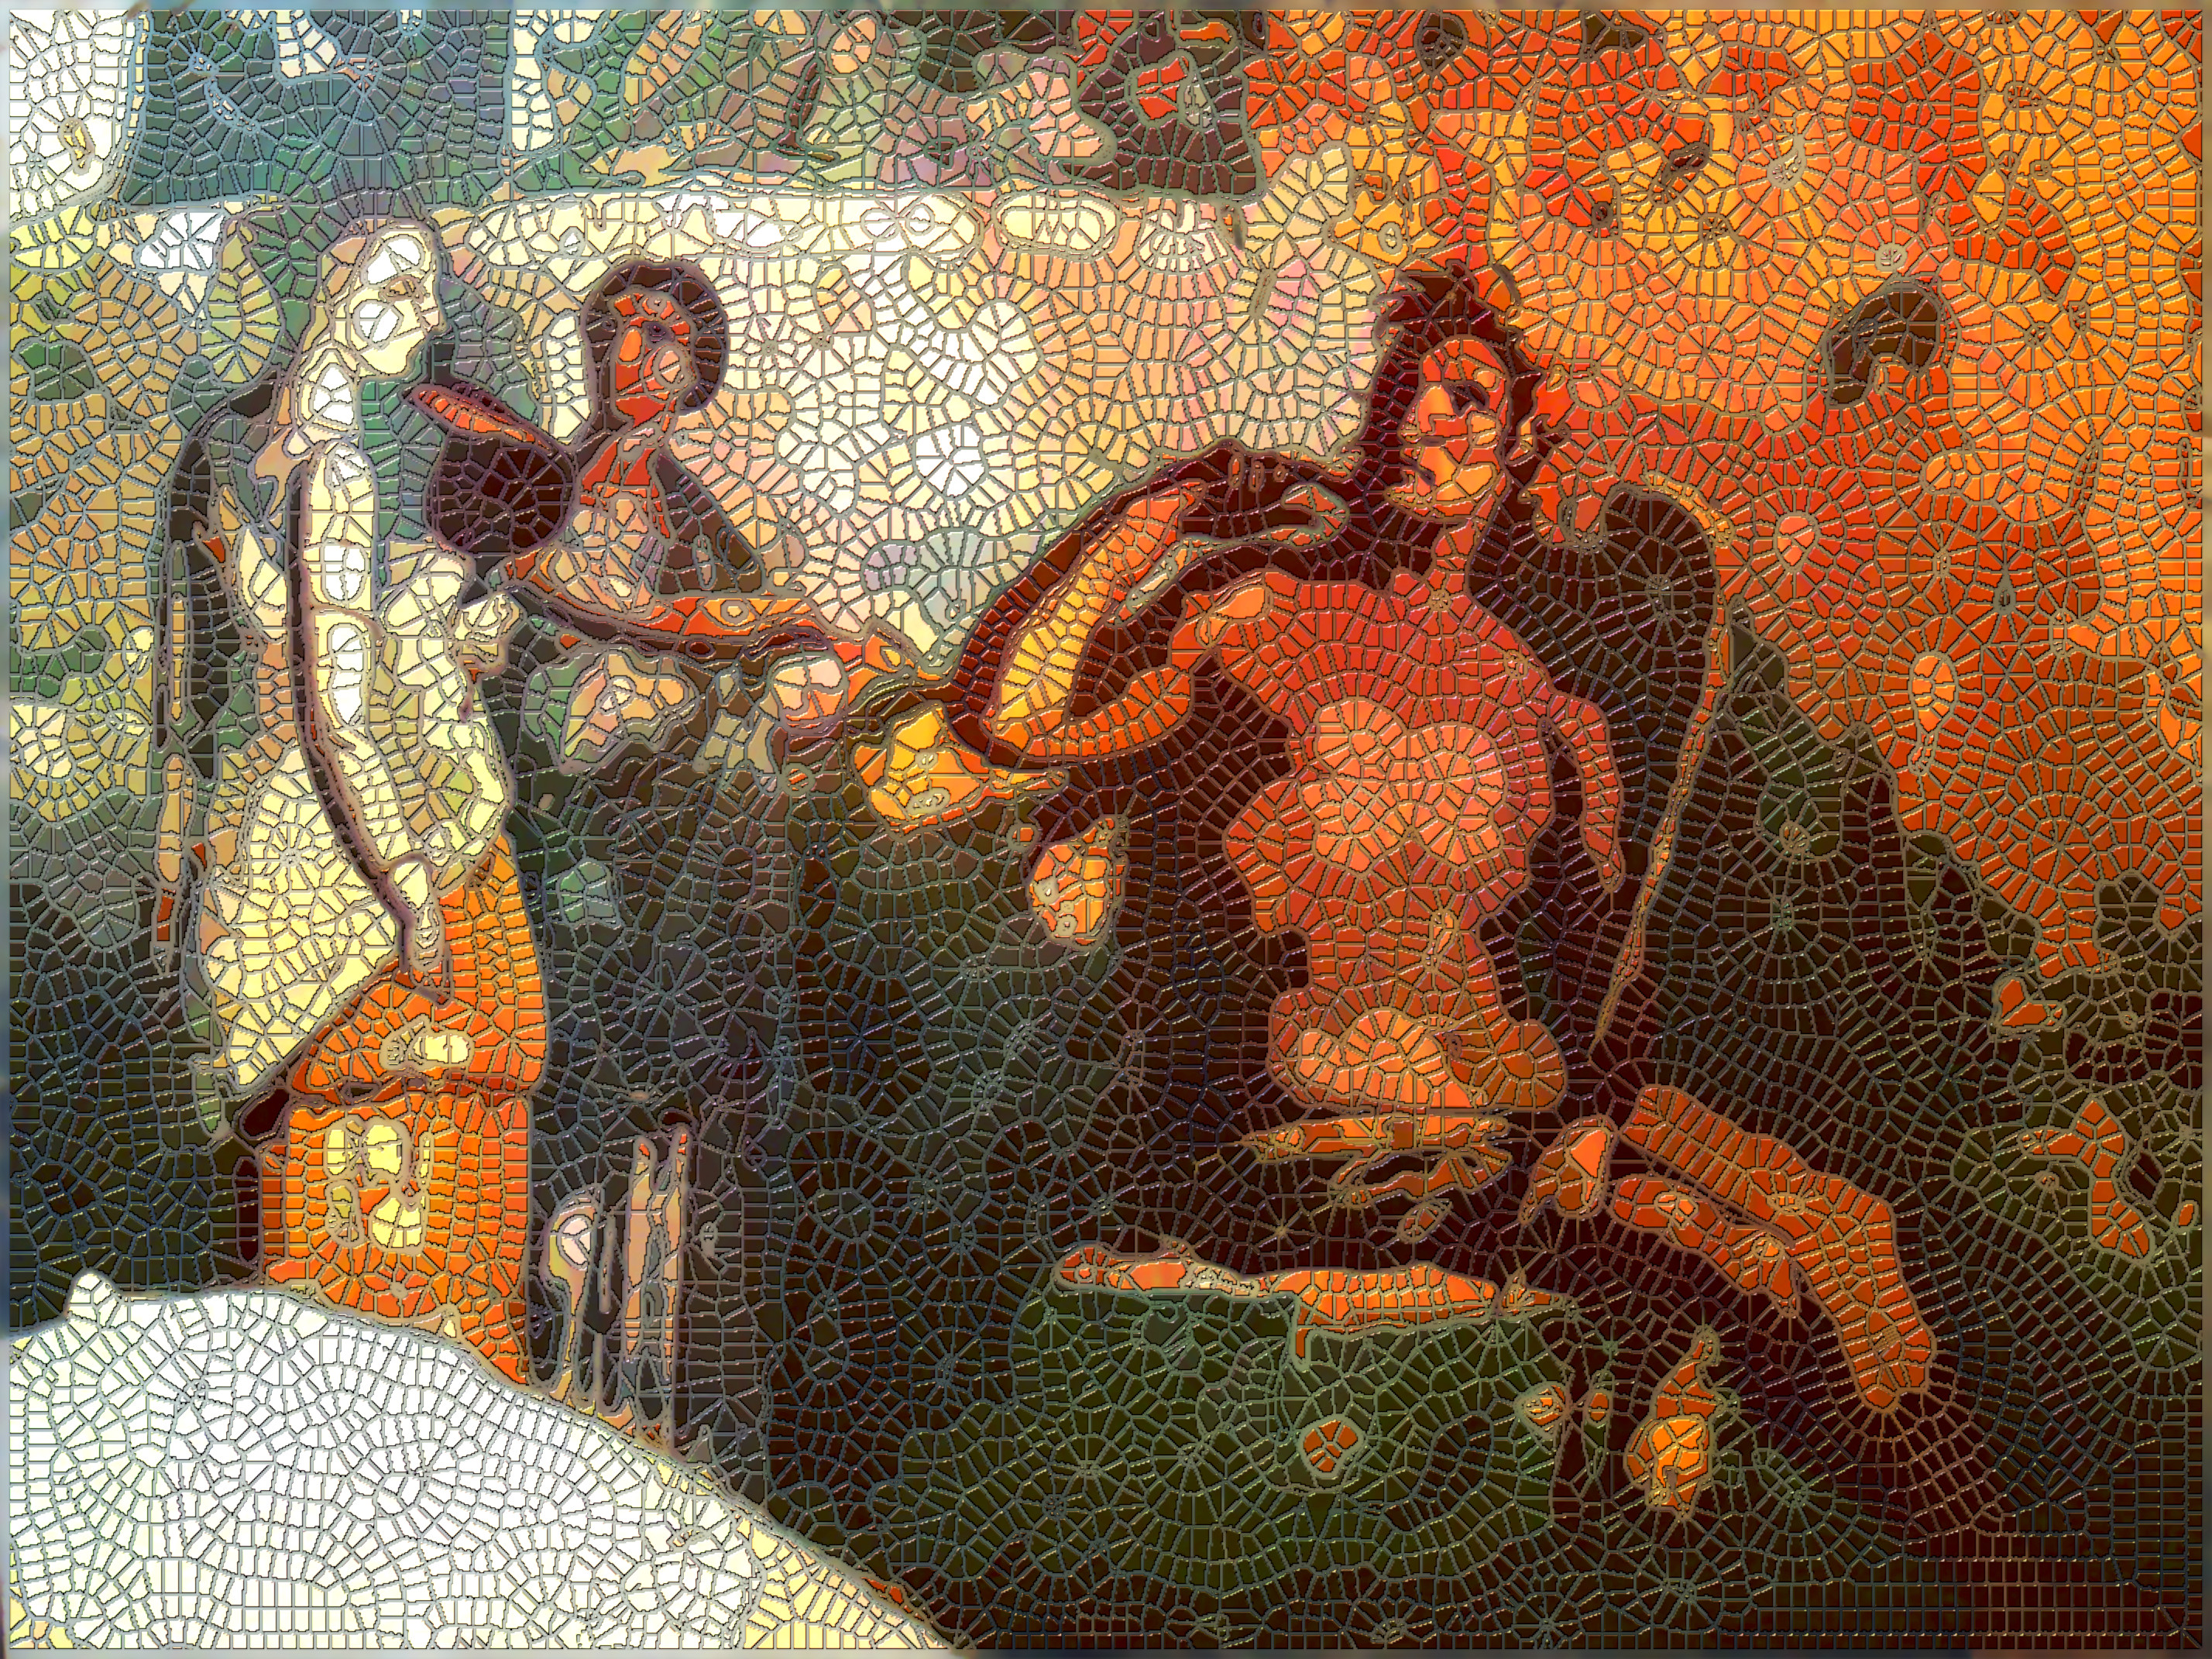 2023-09-11 17-30-15 97981c820442d5fee4433ff74257632b, as a Roman Mosaic  (parms=11,1,1,3,1,1,0,1).jpeg